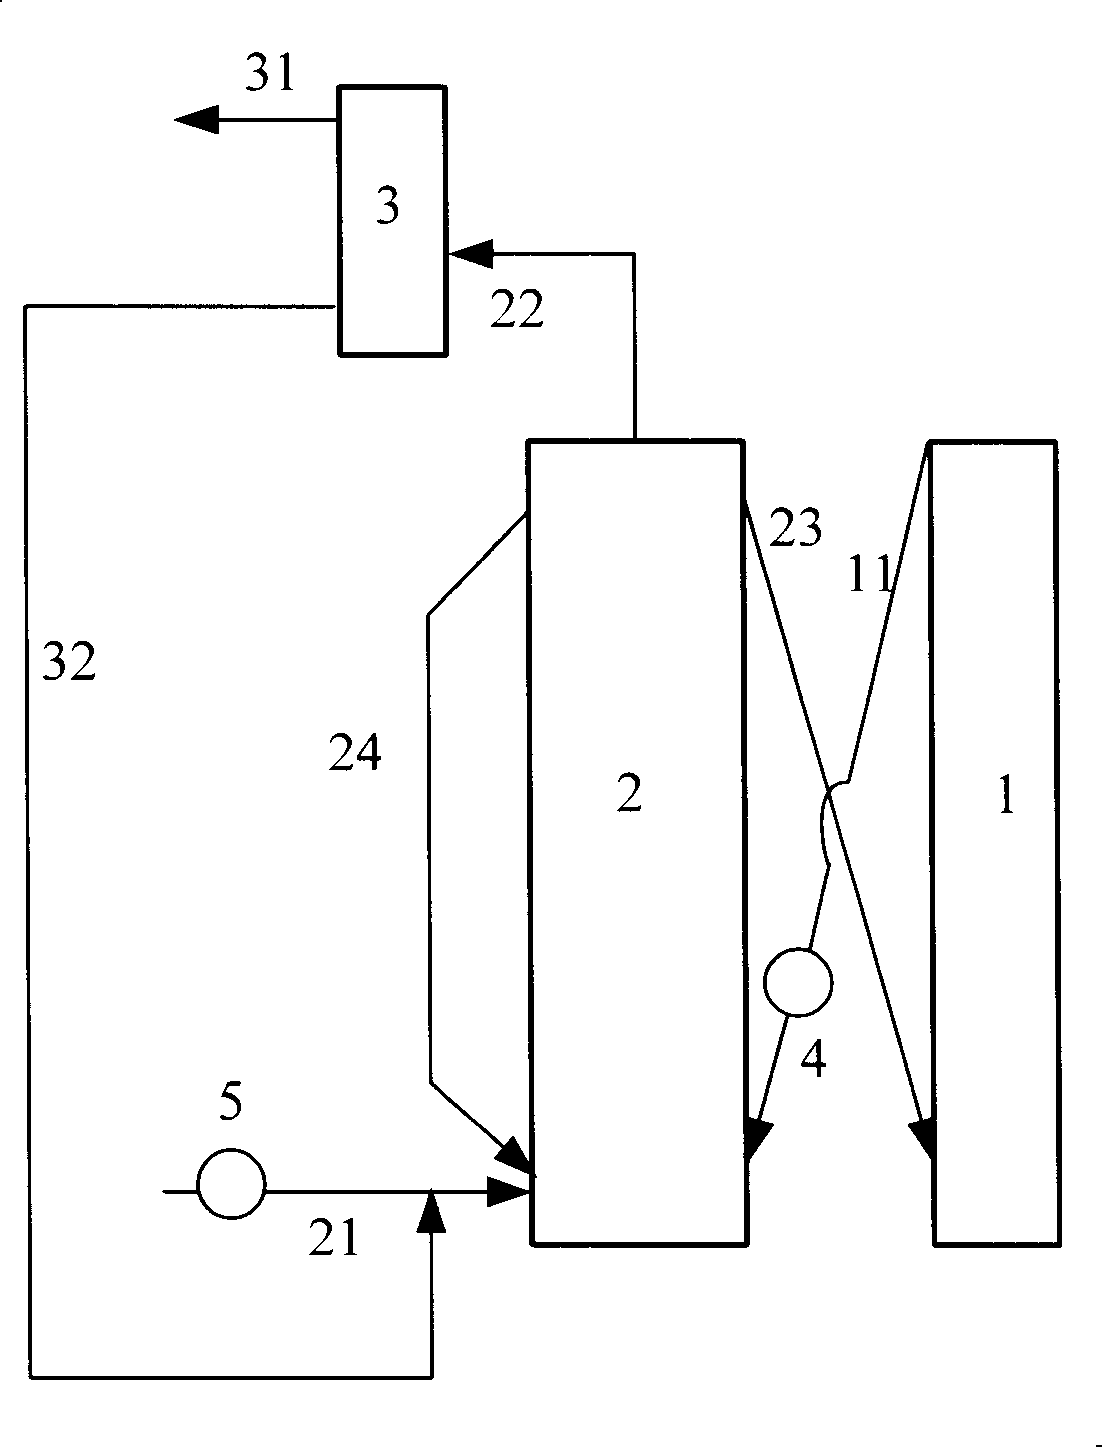 Method for producing dimethyl ether from methanol